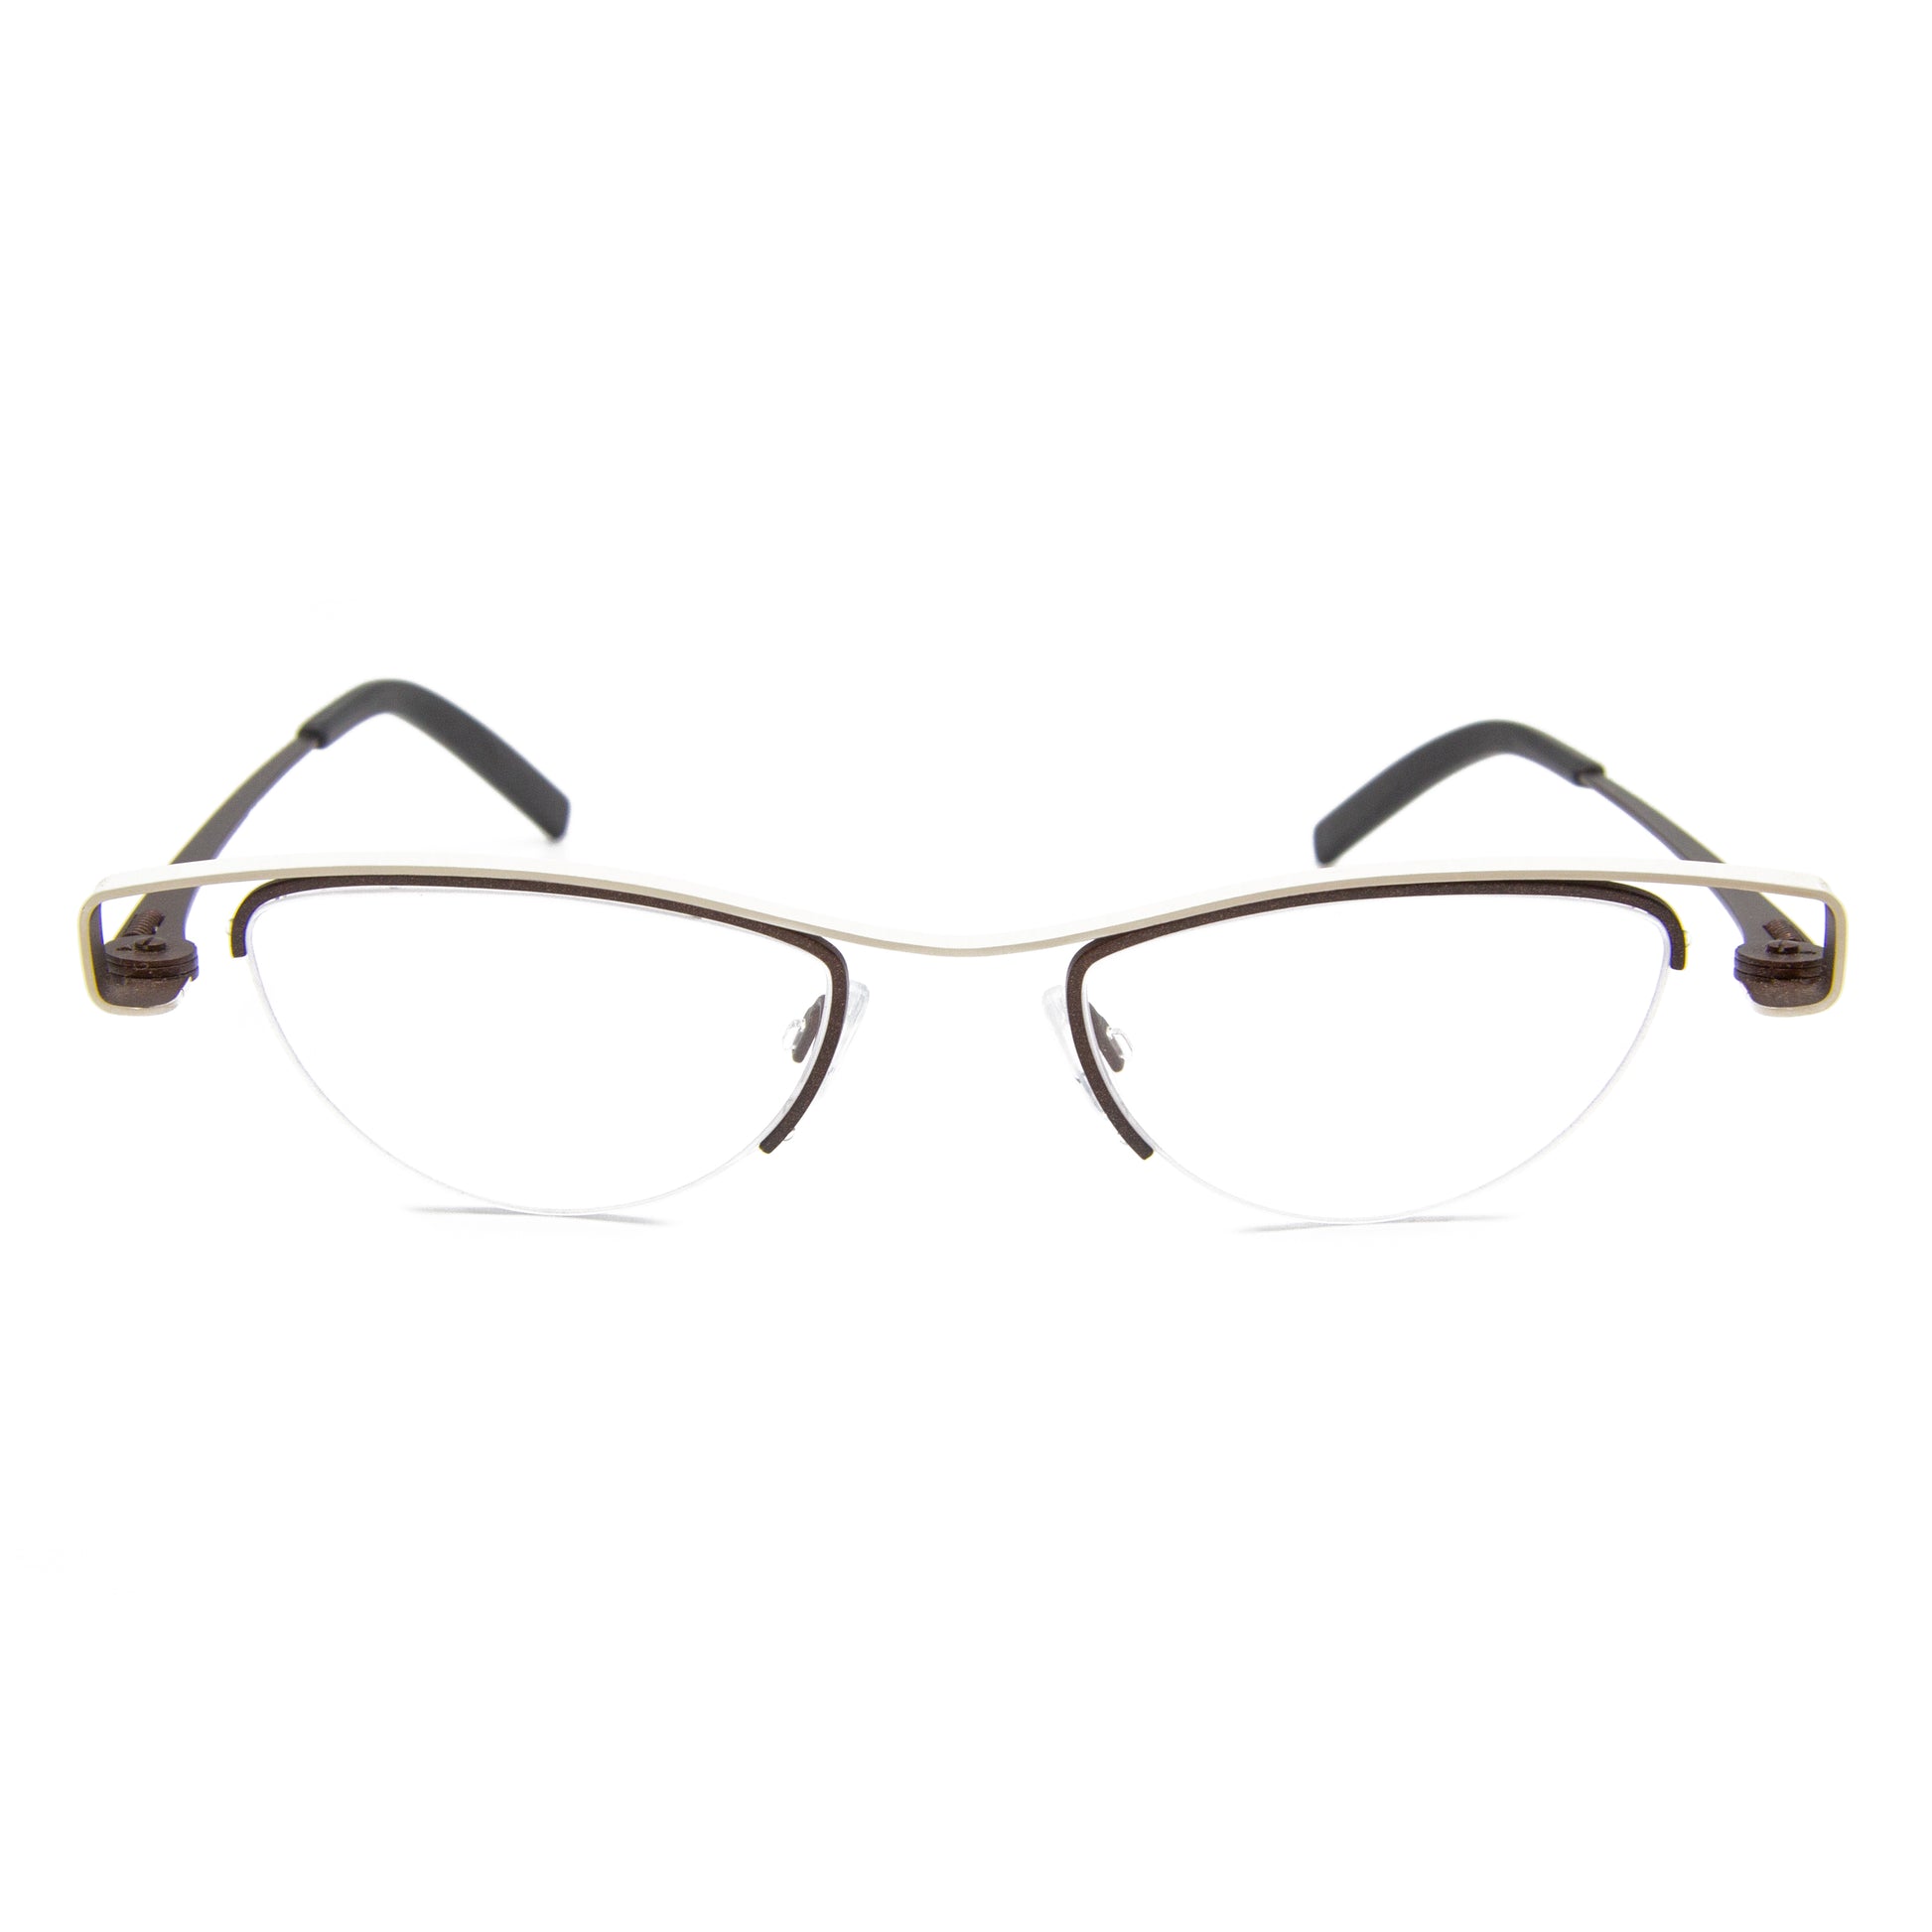 Theo - Eyewear - Knoedel - 199 - Glasses